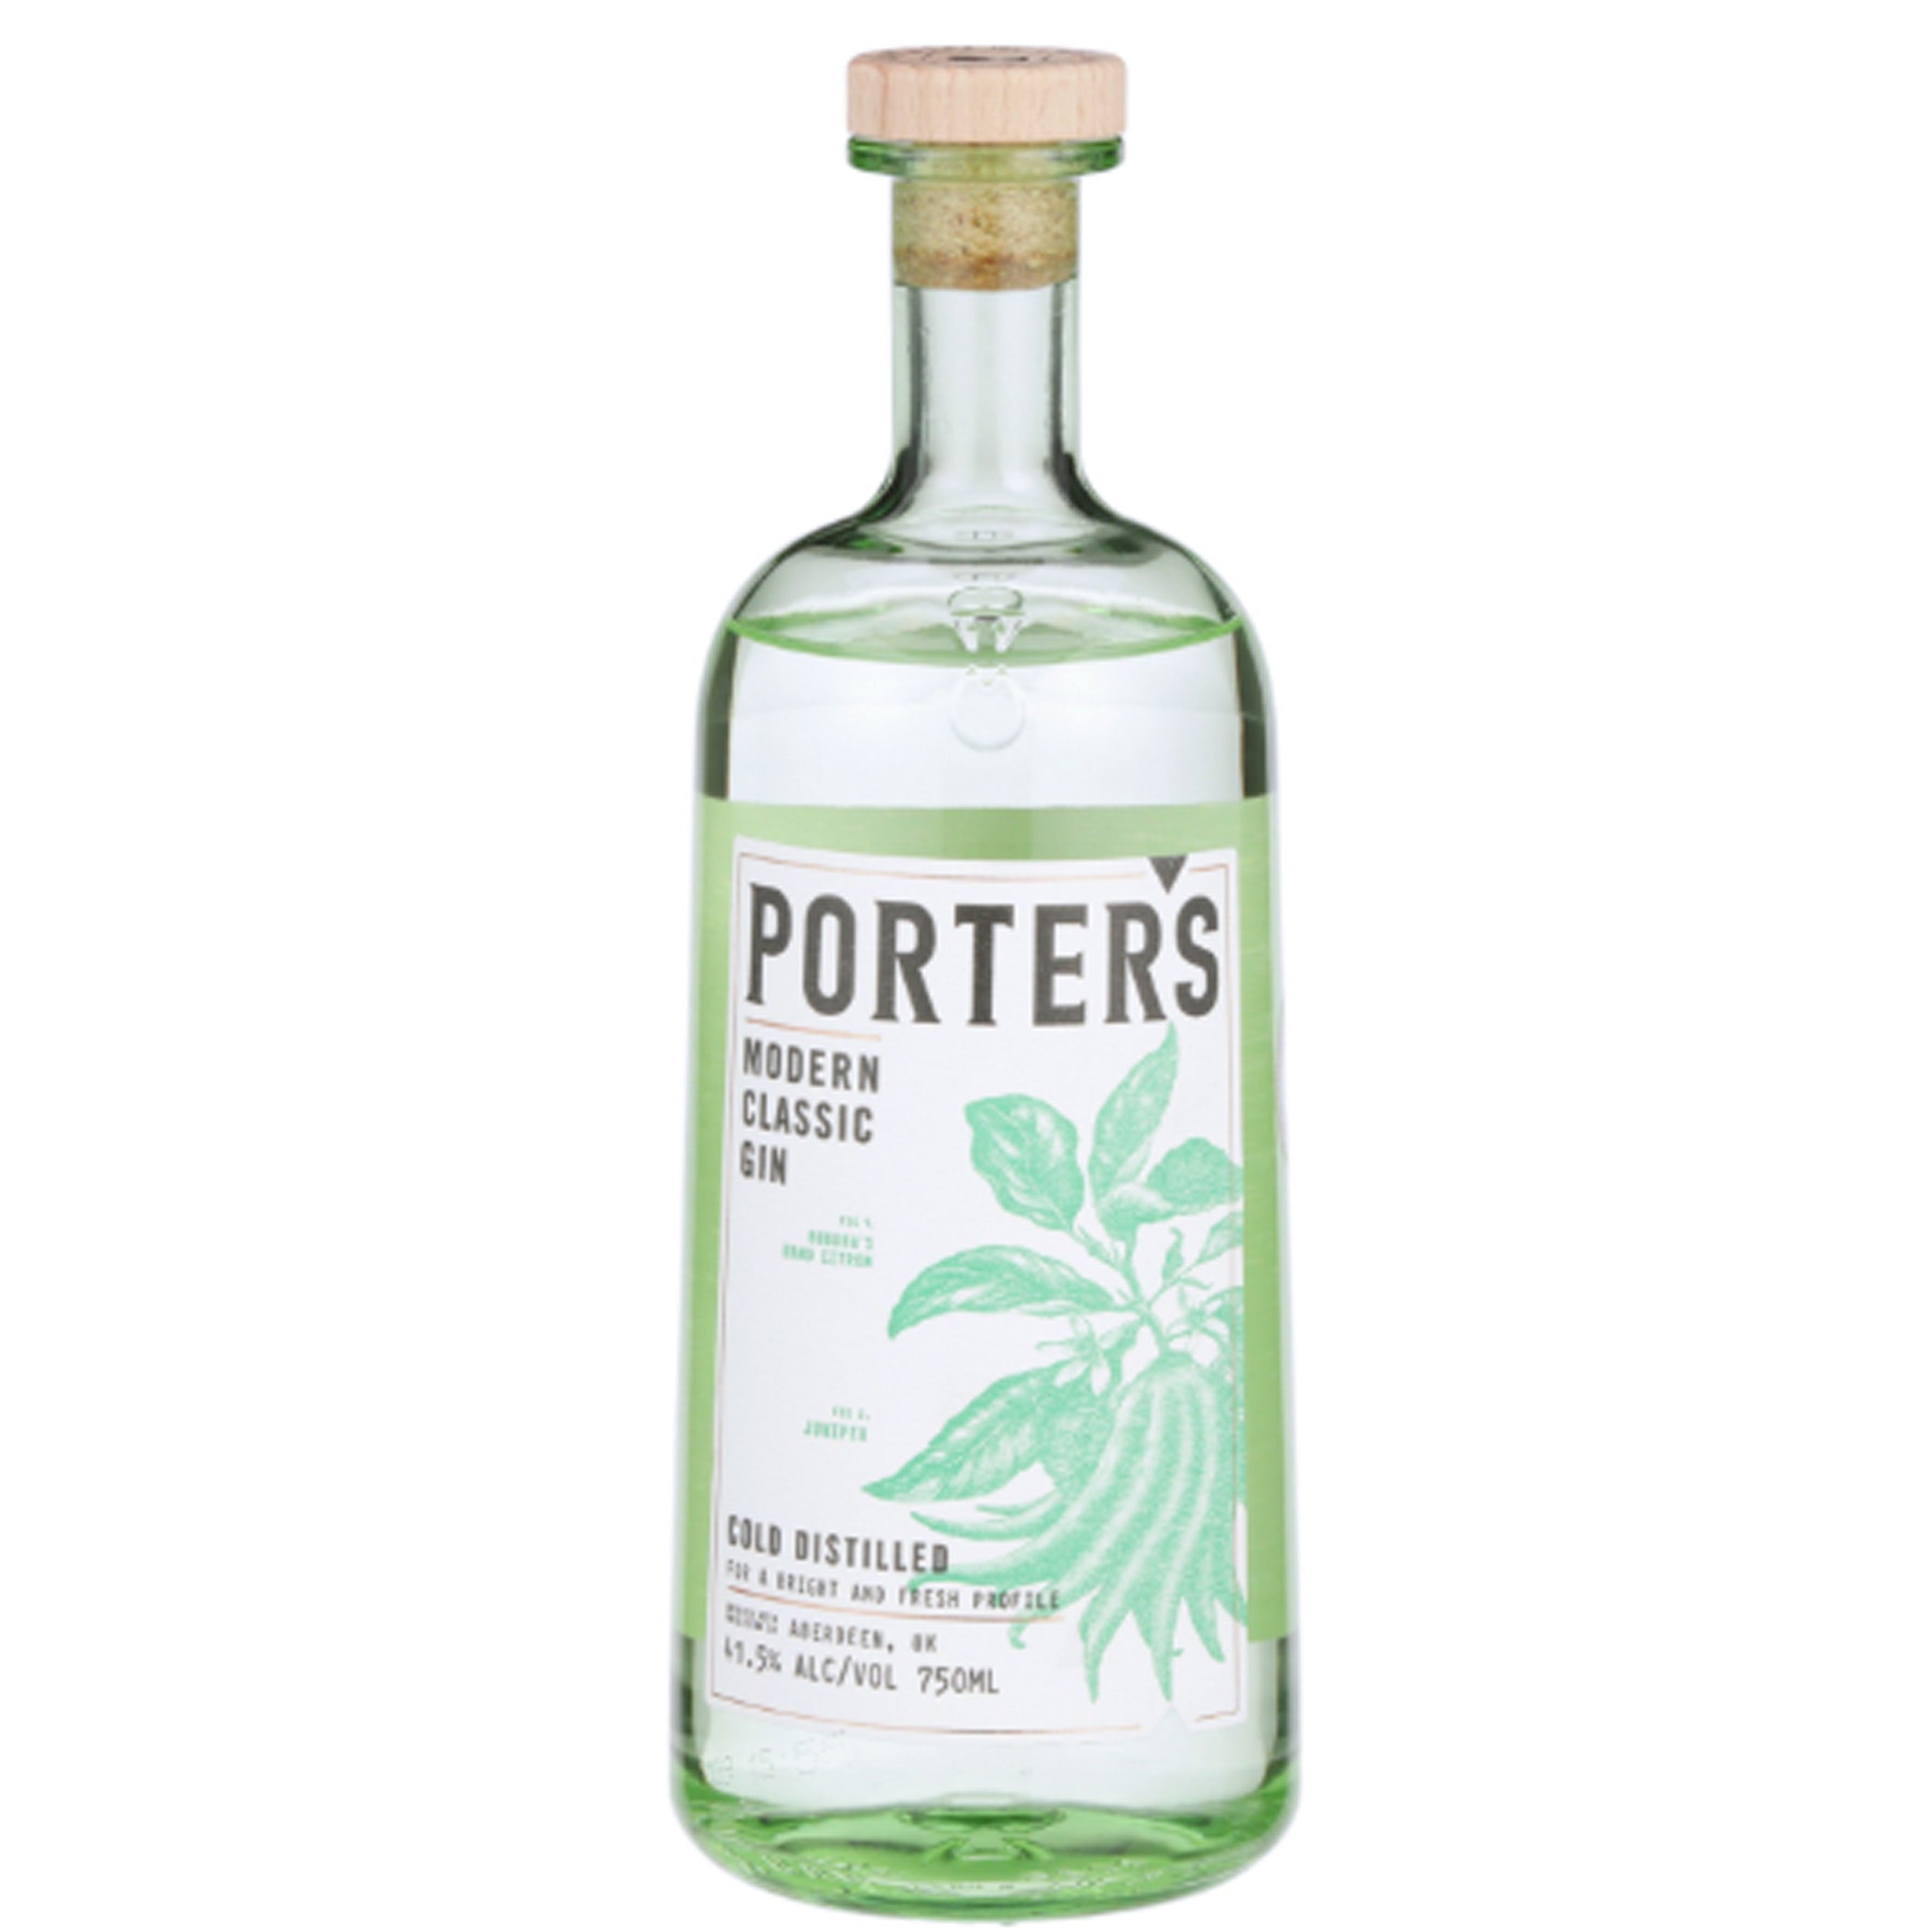 Porters Modern Classic Dry Gin